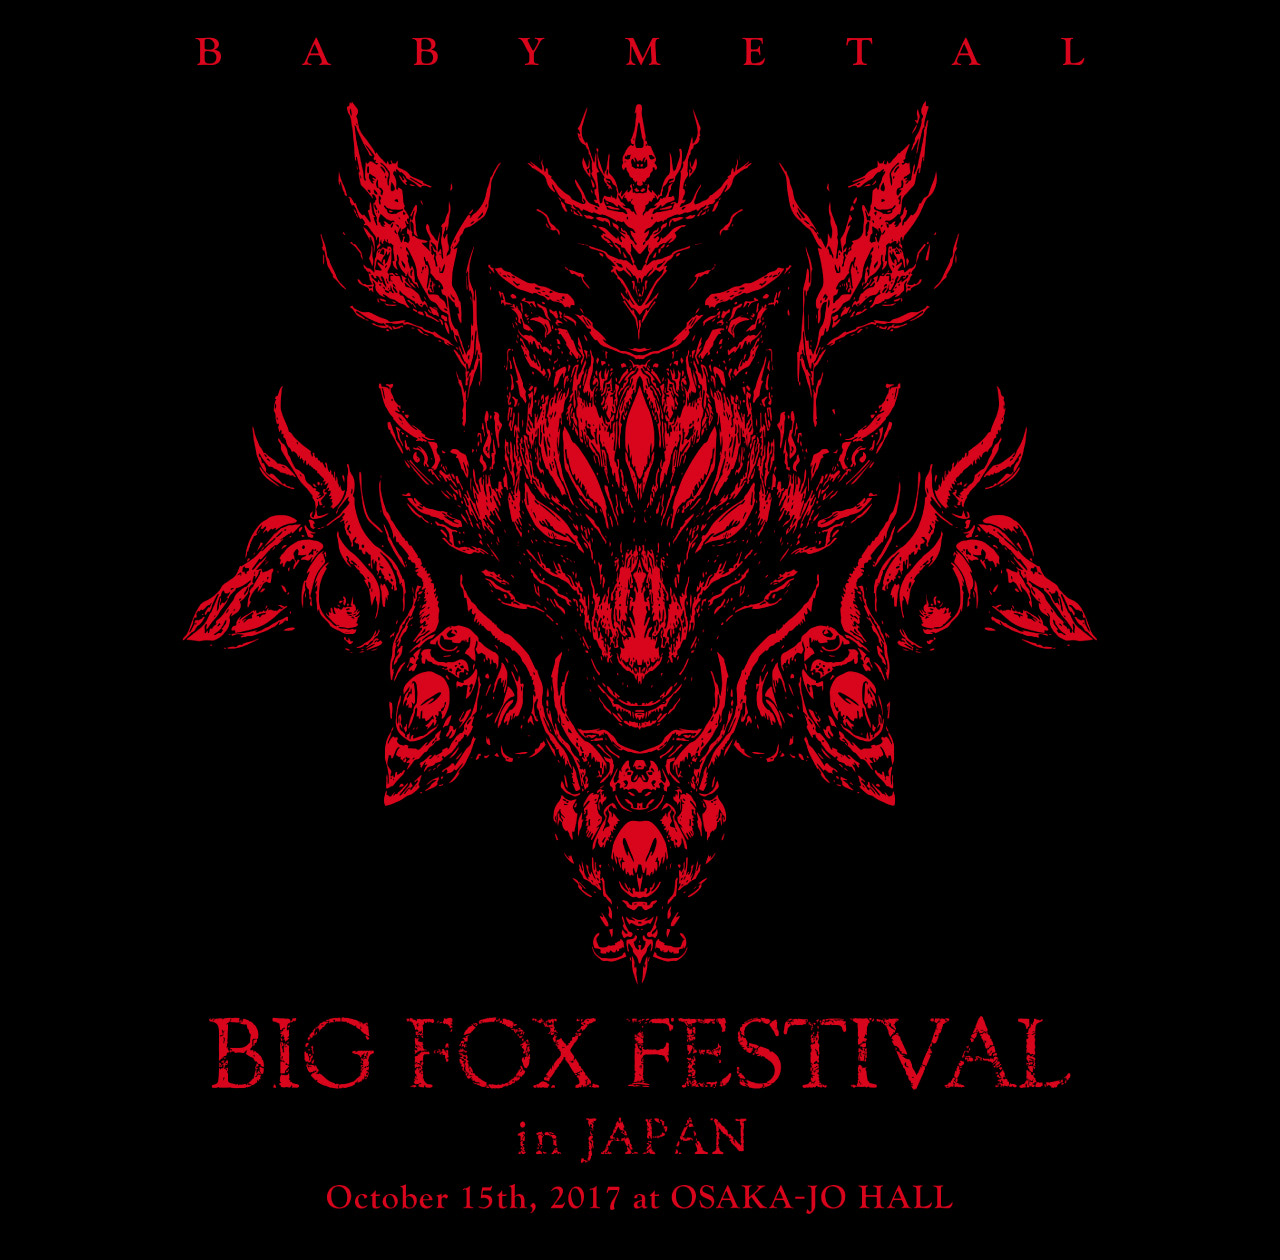 THE FOX FESTIVALS IN JAPAN 2017-